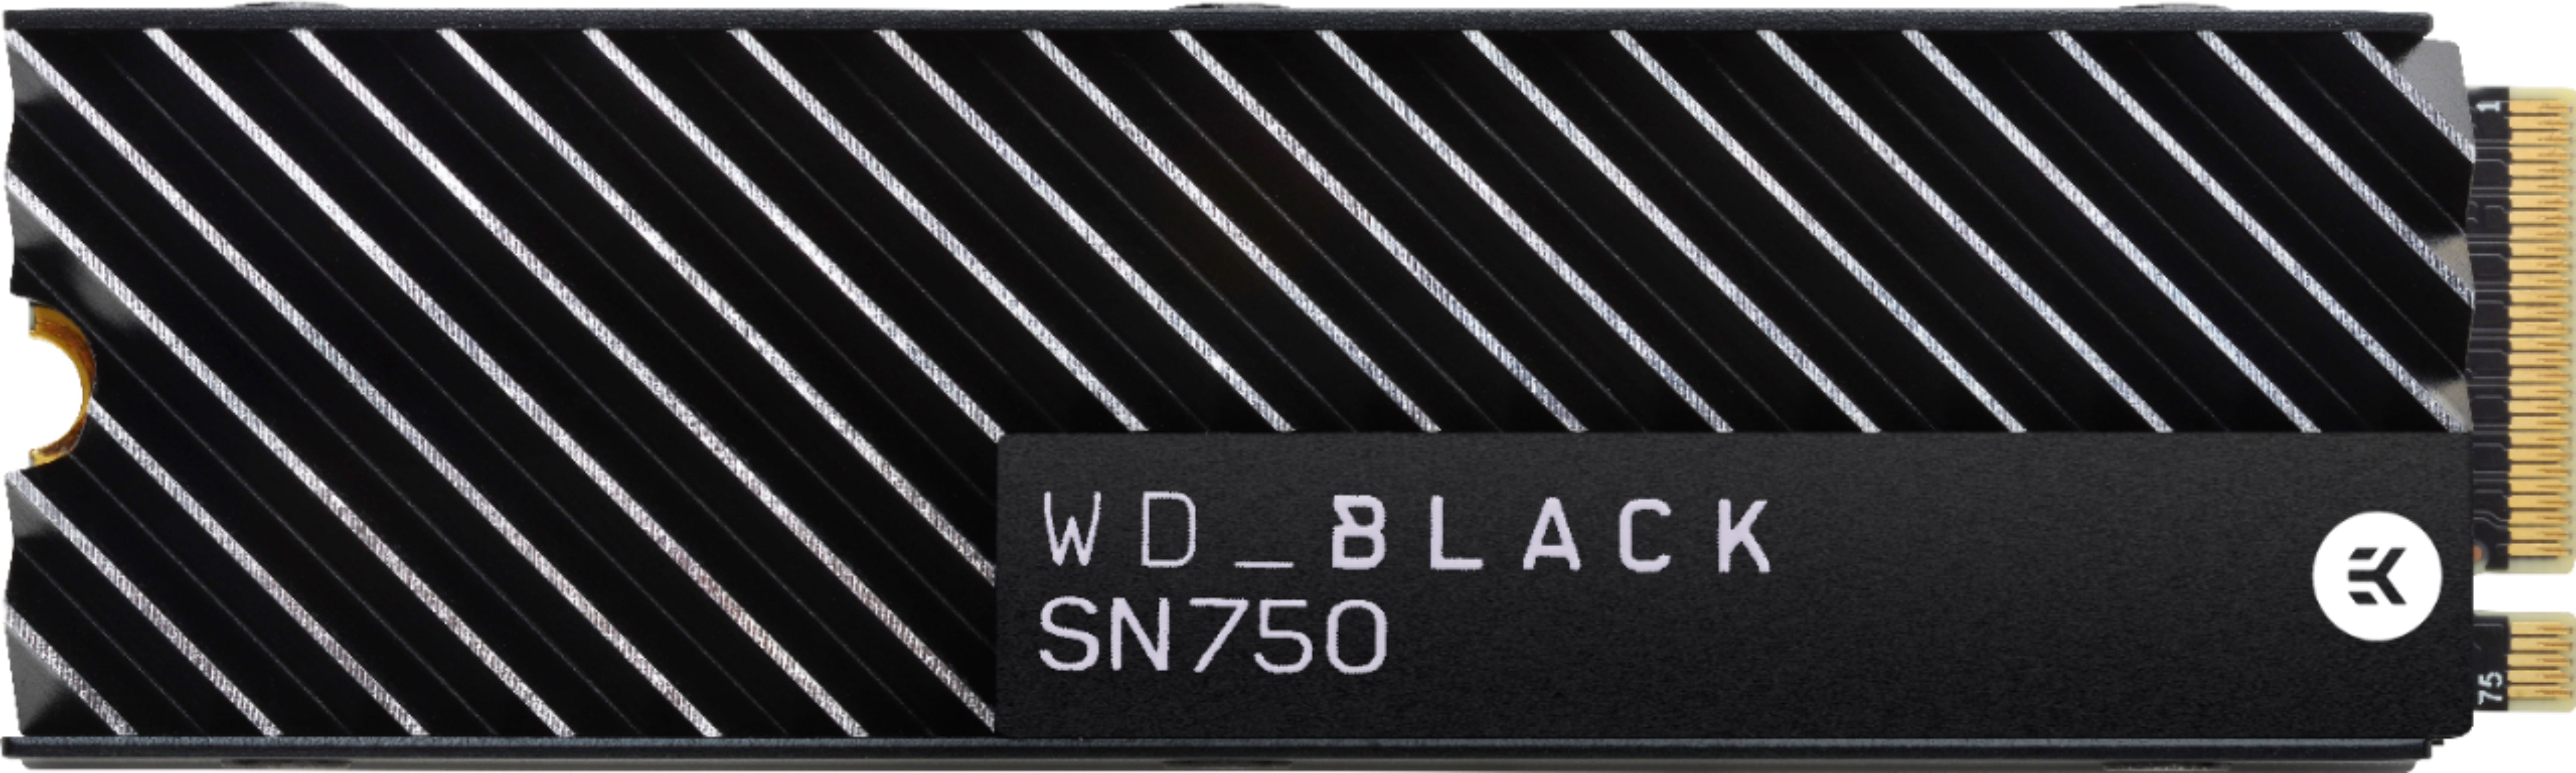 Wd Wd Black Sn750 Nvme 1tb Internal Pcie Gen 3 X 4 Solid State Drive For Desktops Only Wdbgmp0010bnc Wrsn Best Buy